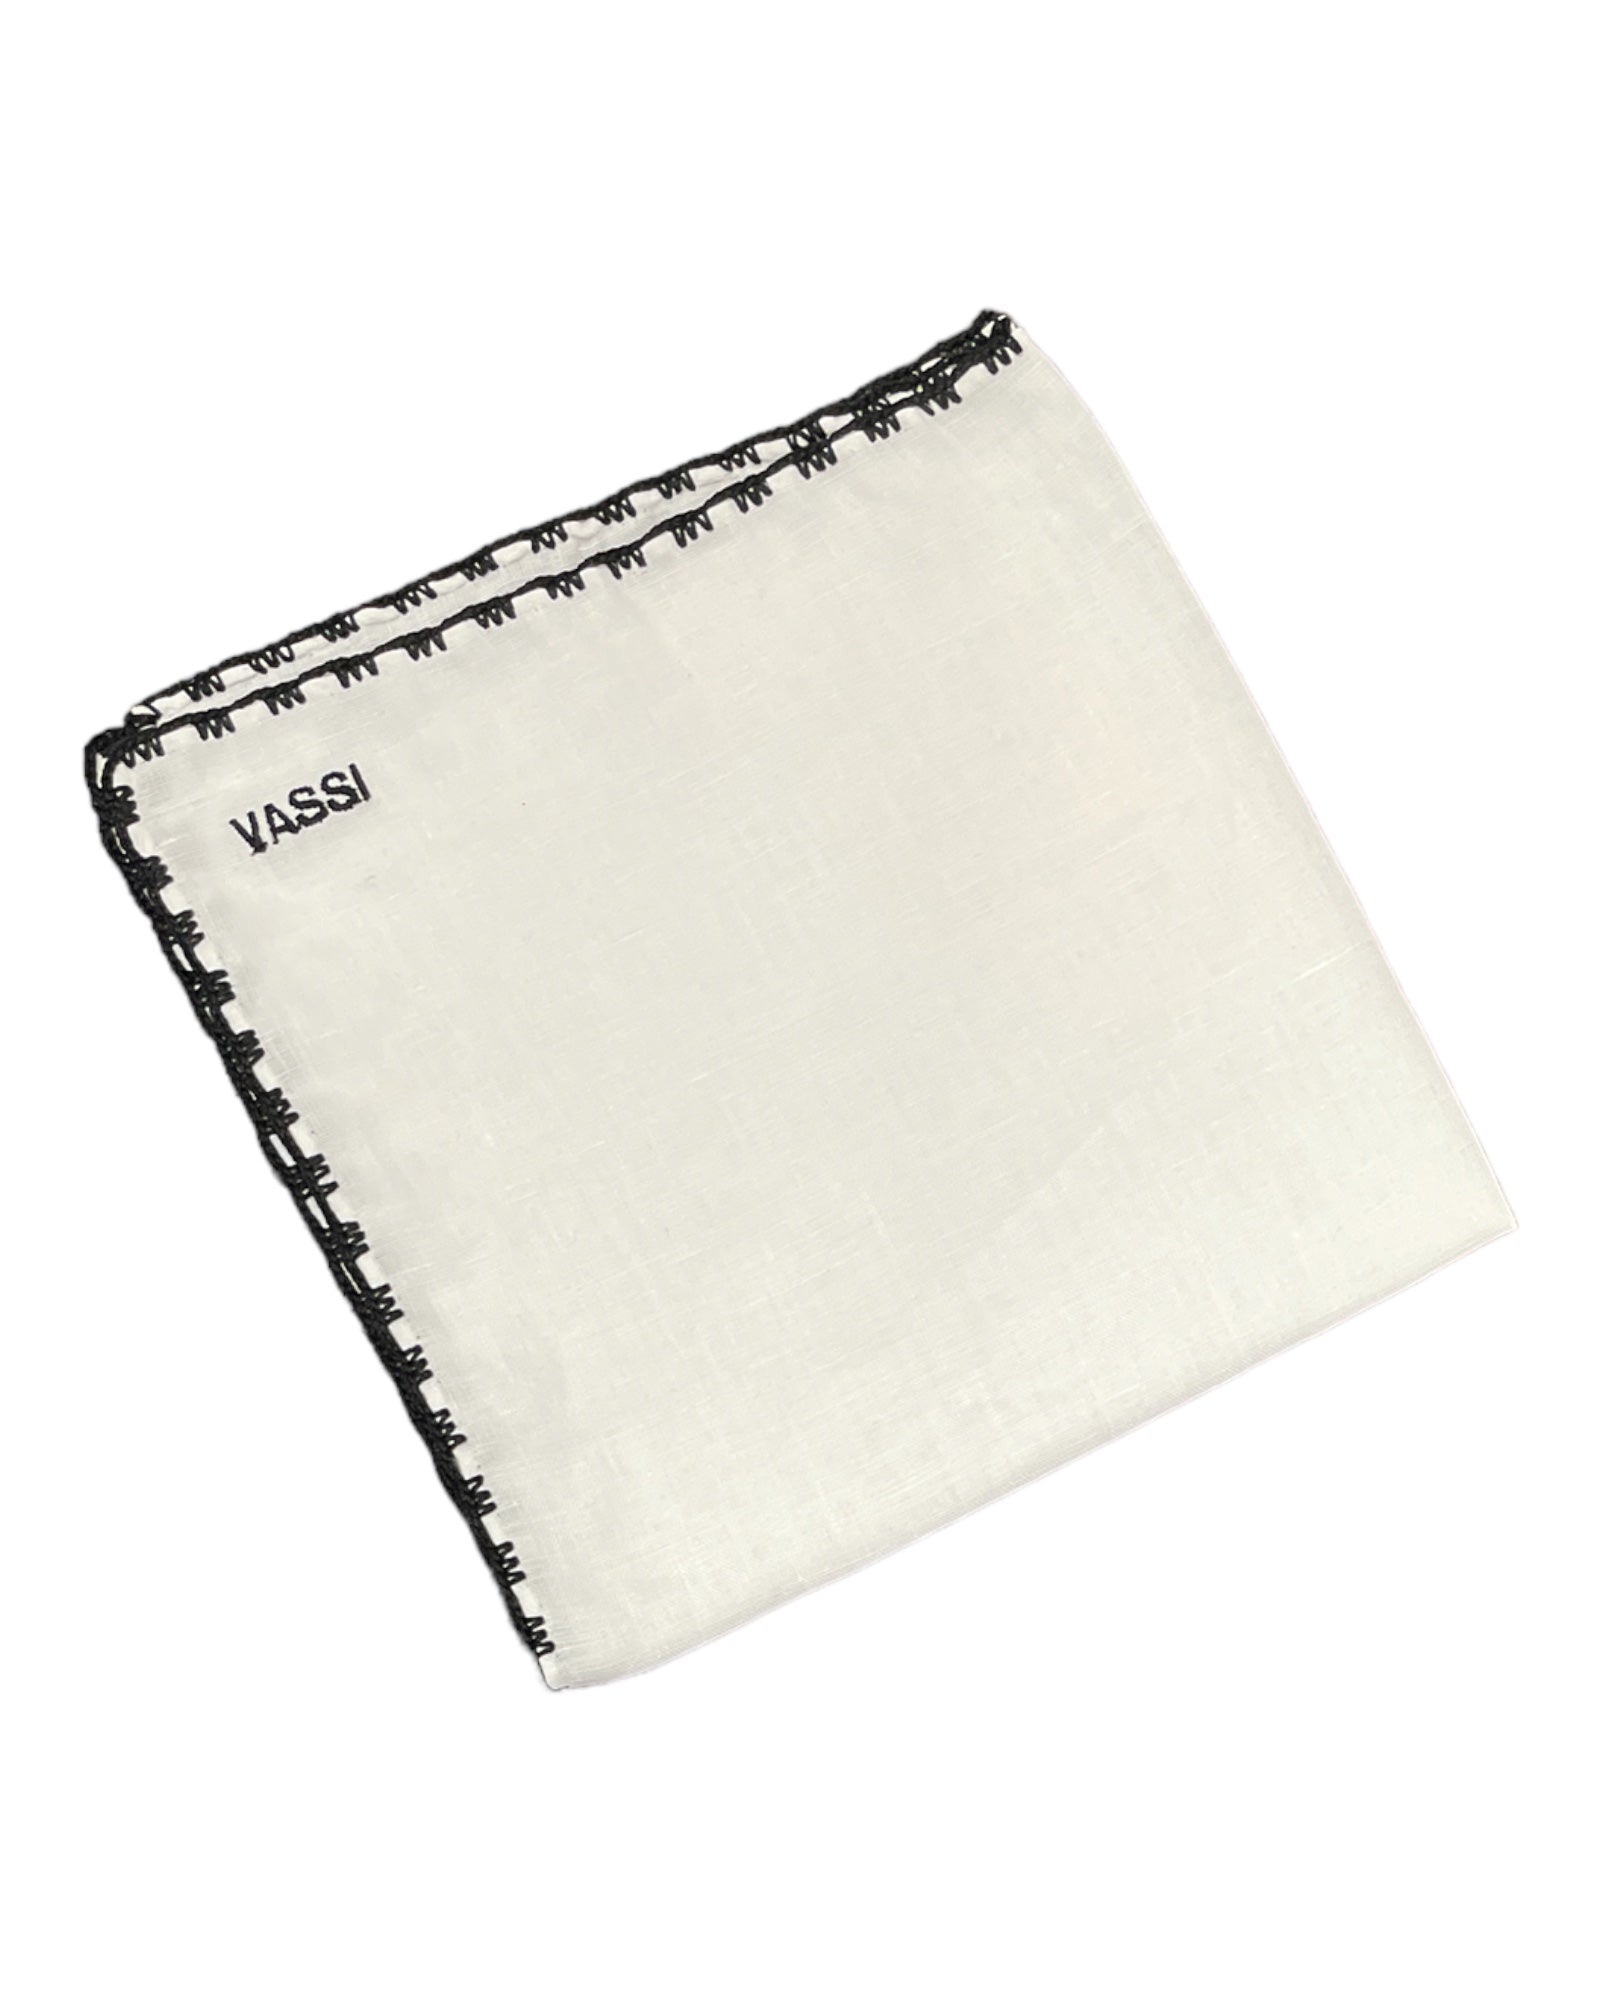 White Linen Pocket Square With Handrolled Triple V- Stitch Pocket SquareBlack